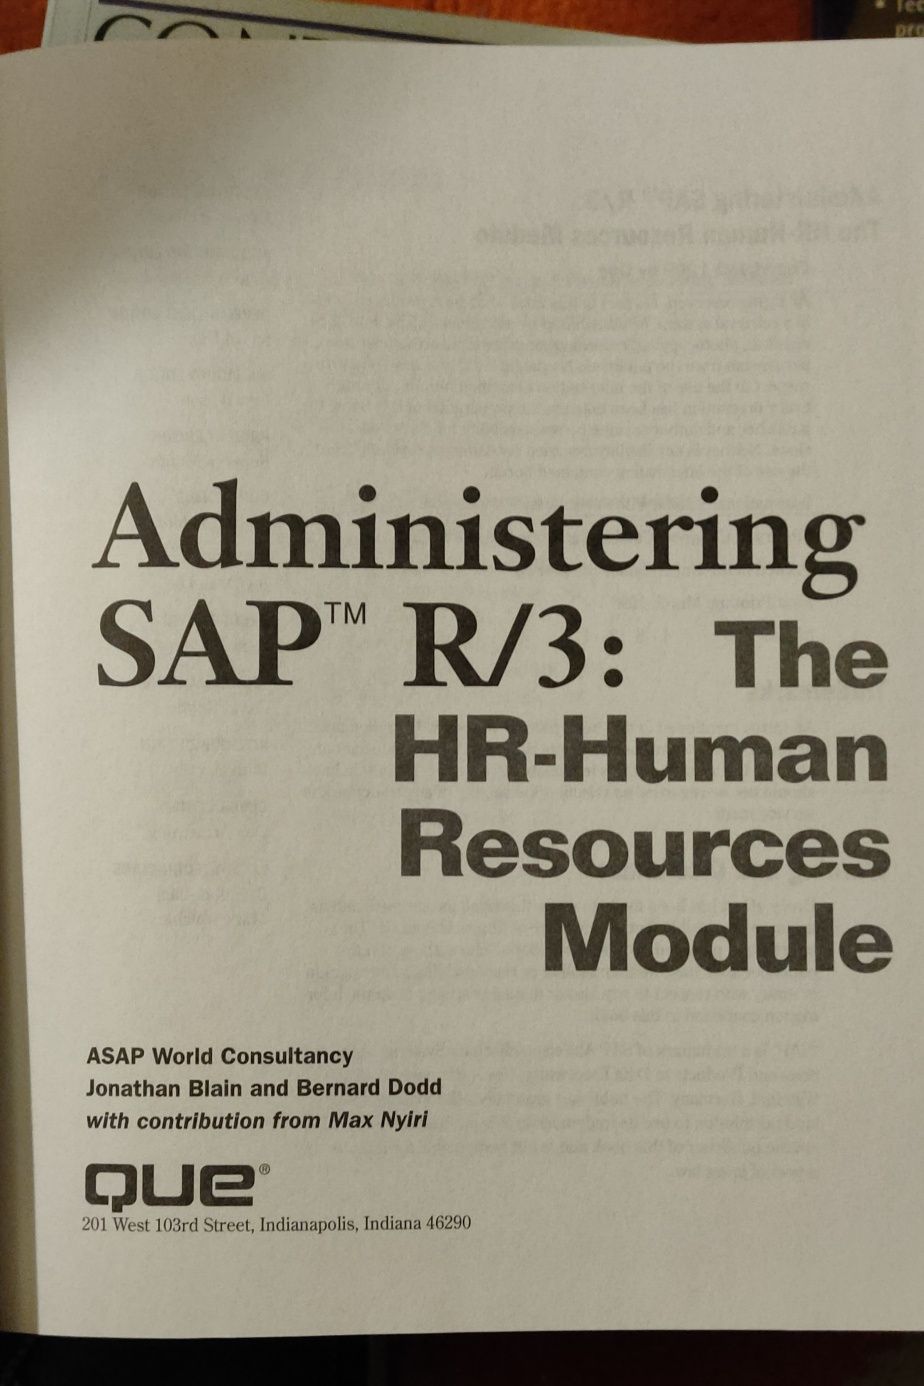 Manual Administering SAP R/3 Recursos Humanos